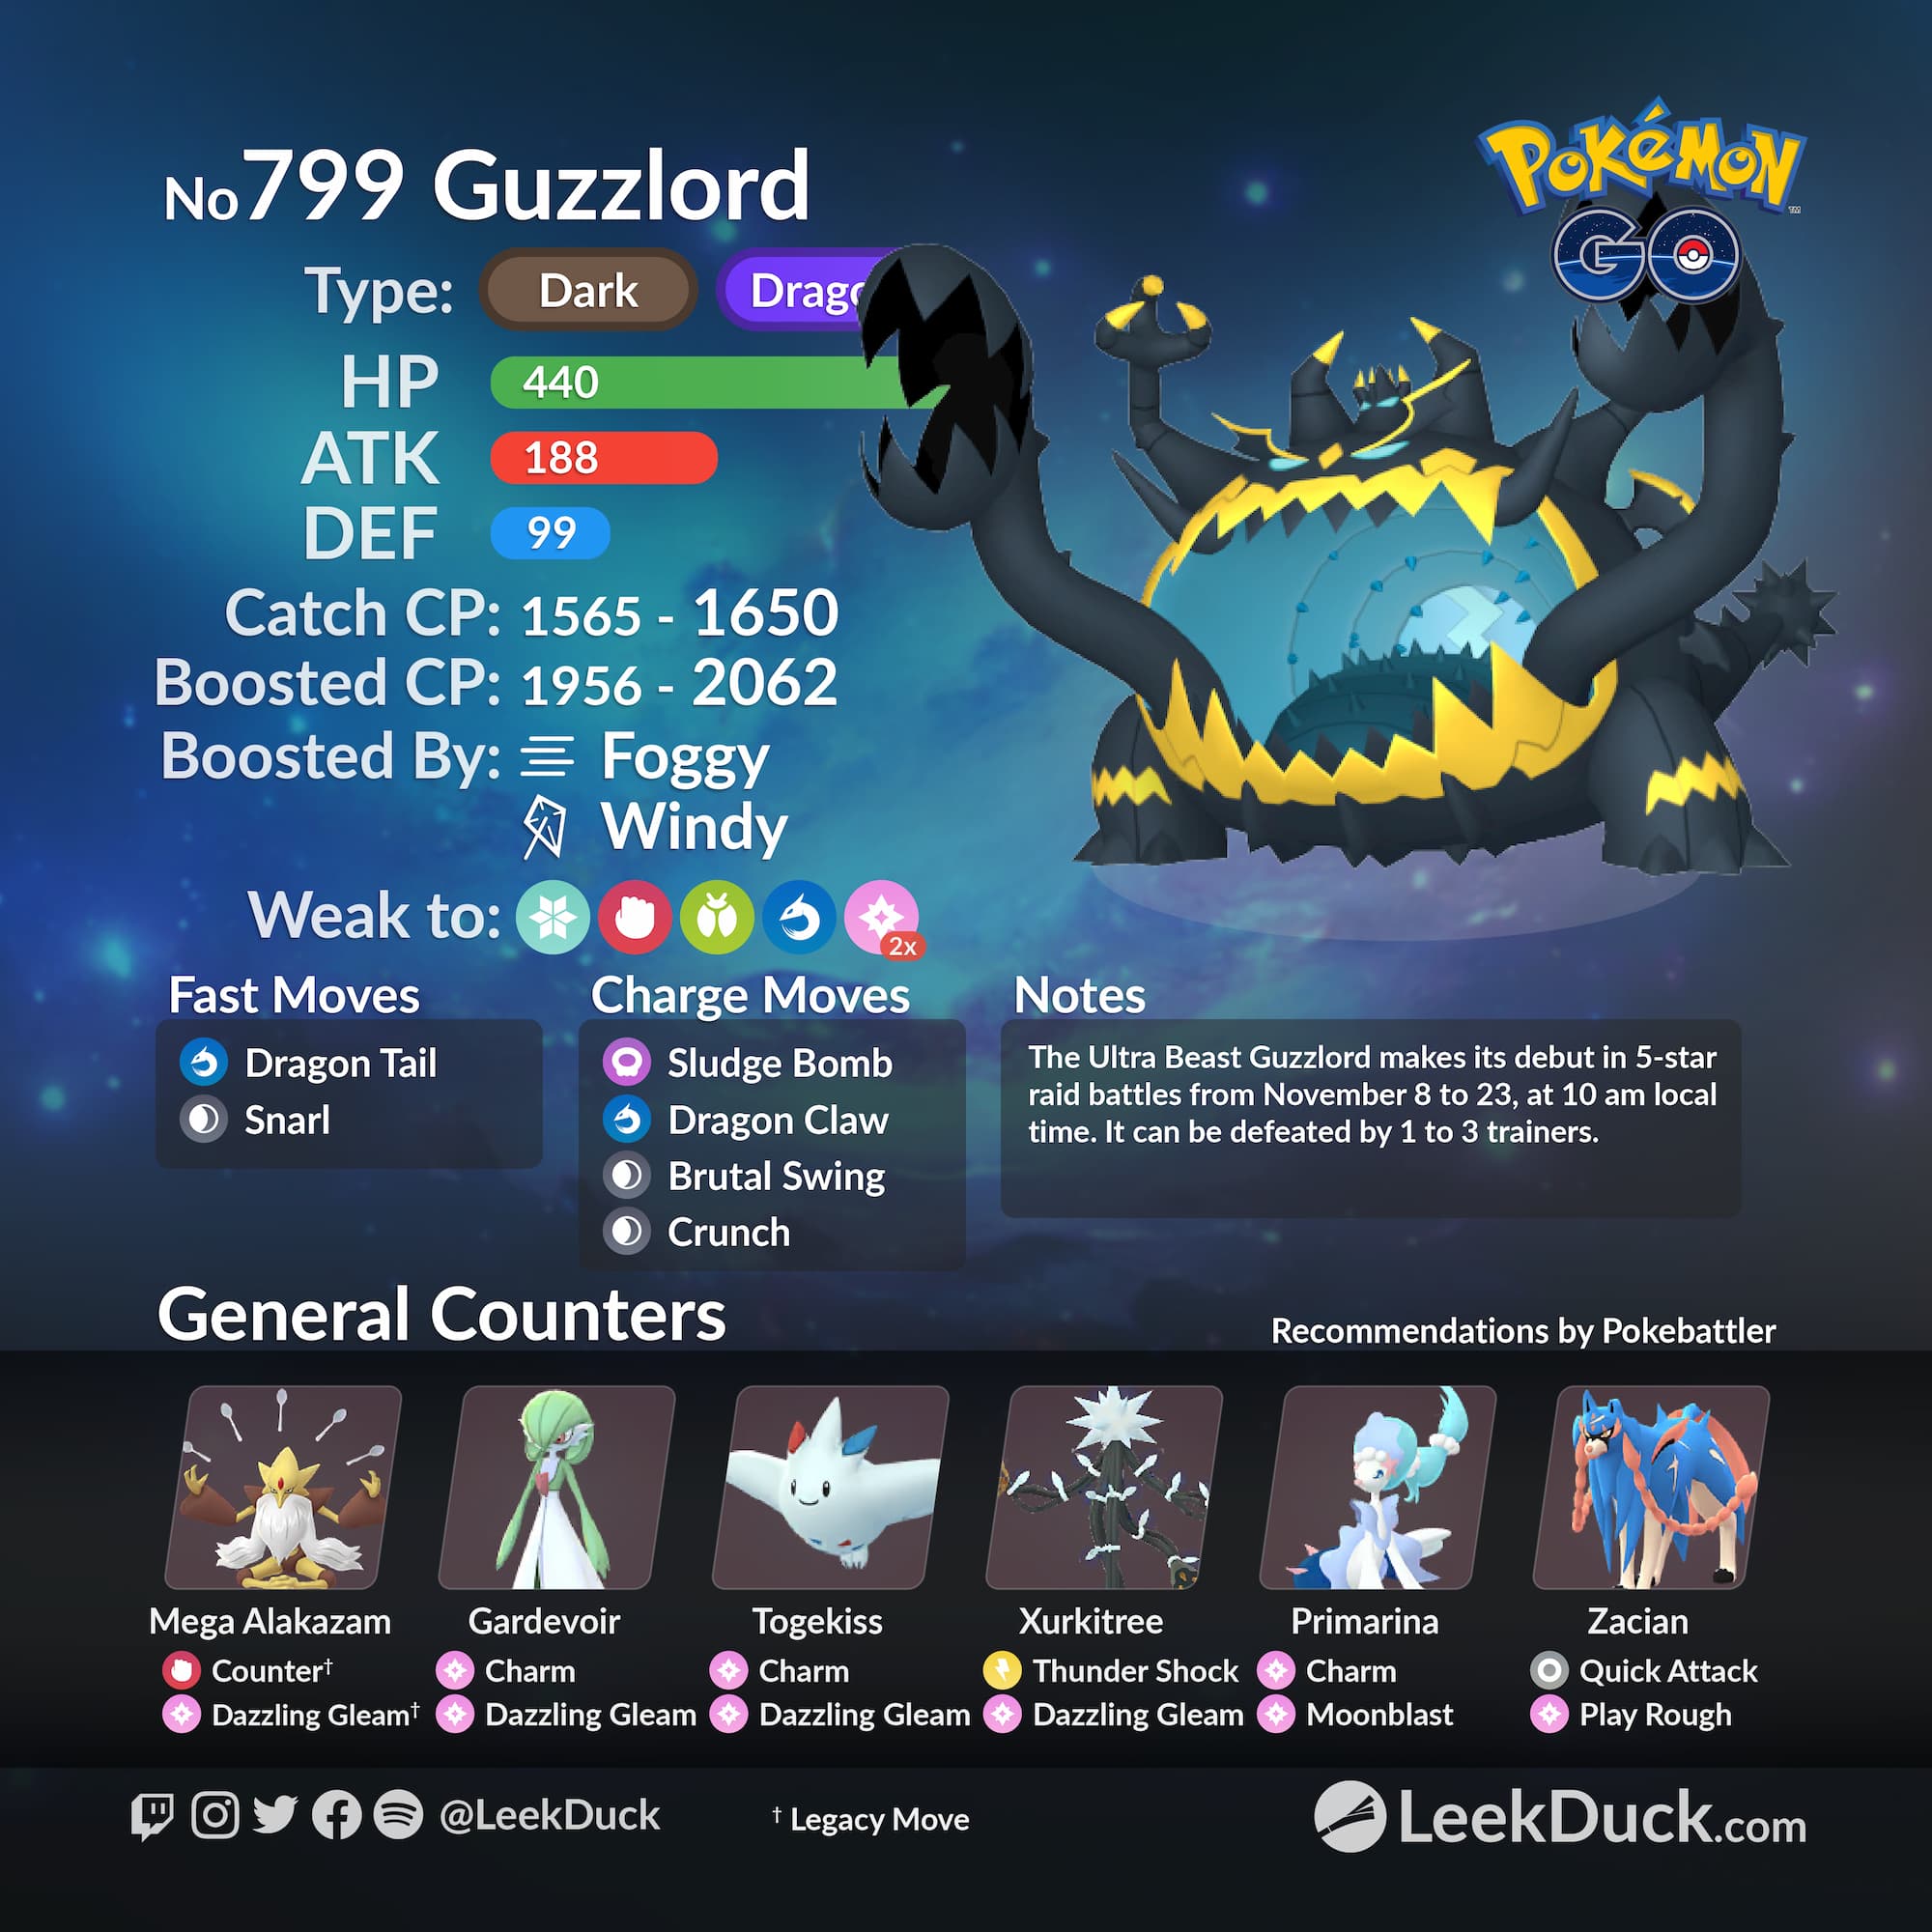 Pokemon Go November 2022 Events: Guzzlord Raids, Spotlight Hours and More -  CNET